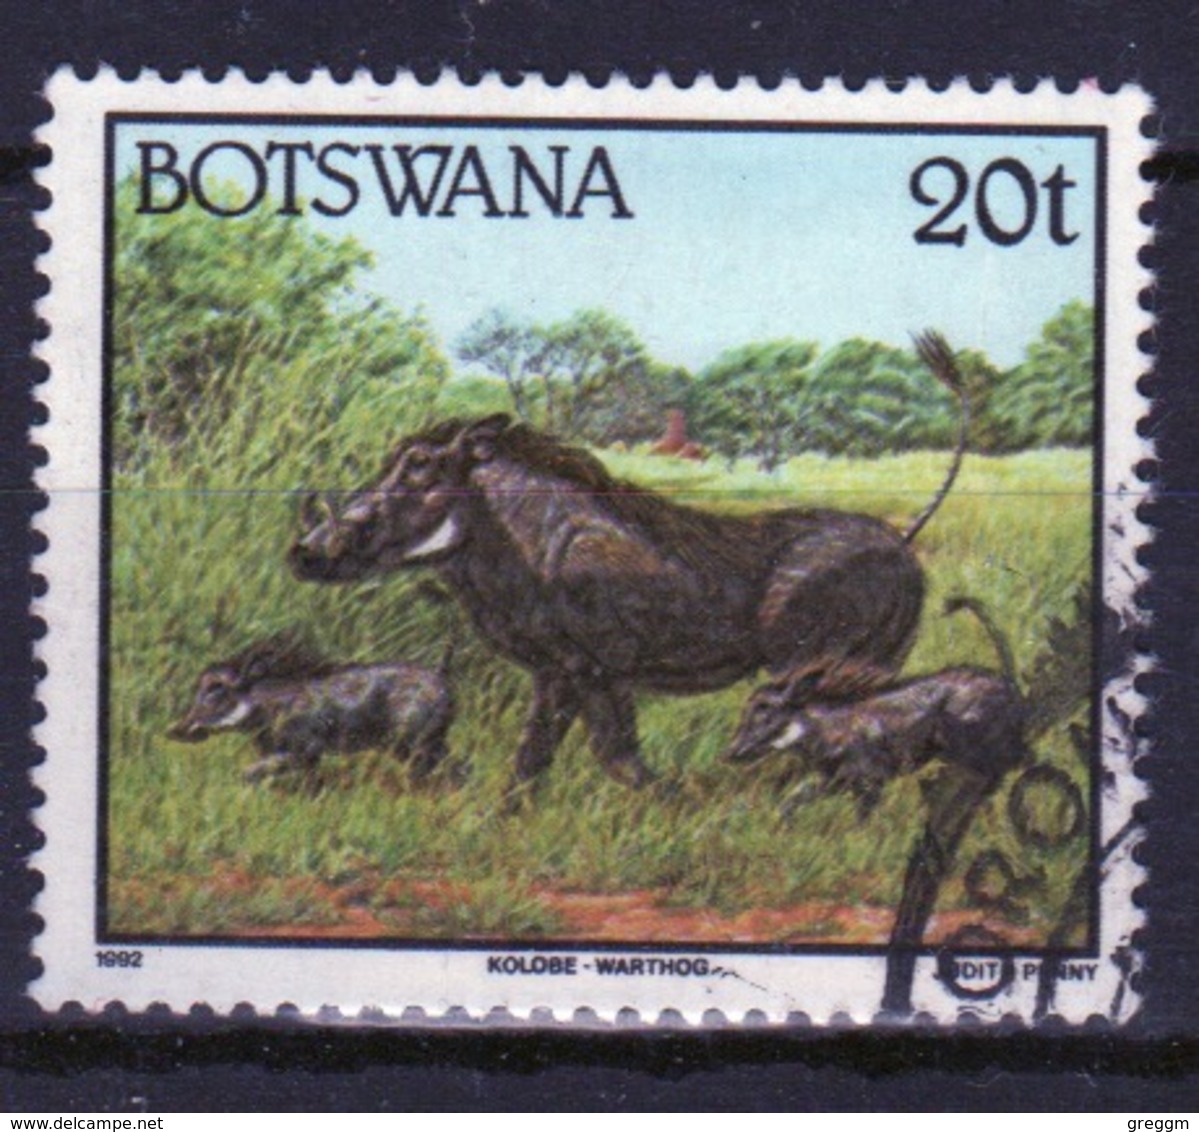 Botswana 1992 Single 20t Definitive Stamp From The Animals Set. - Botswana (1966-...)